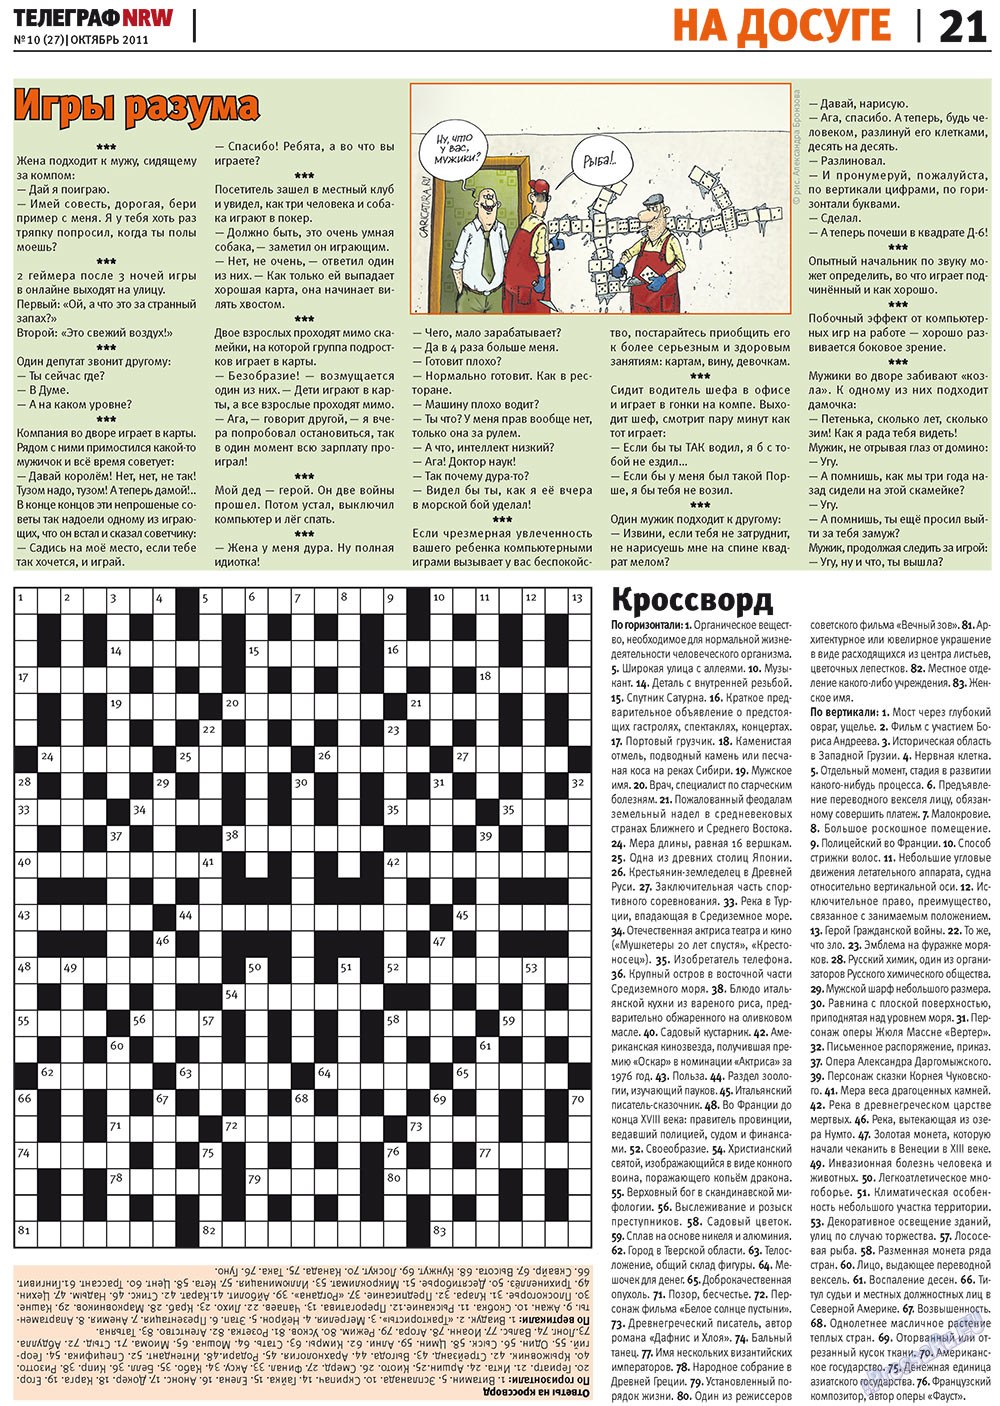 Телеграф NRW, газета. 2011 №10 стр.21